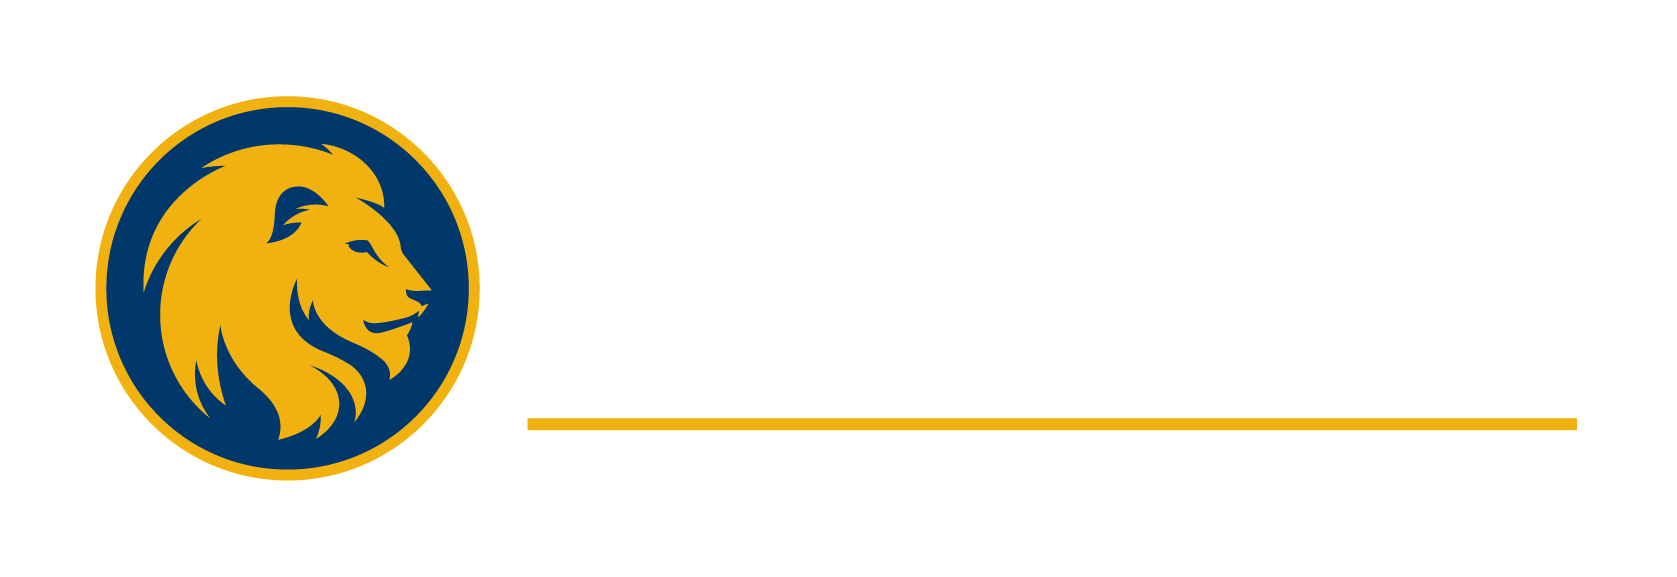 Horizontal TAMUC logo on dark background.